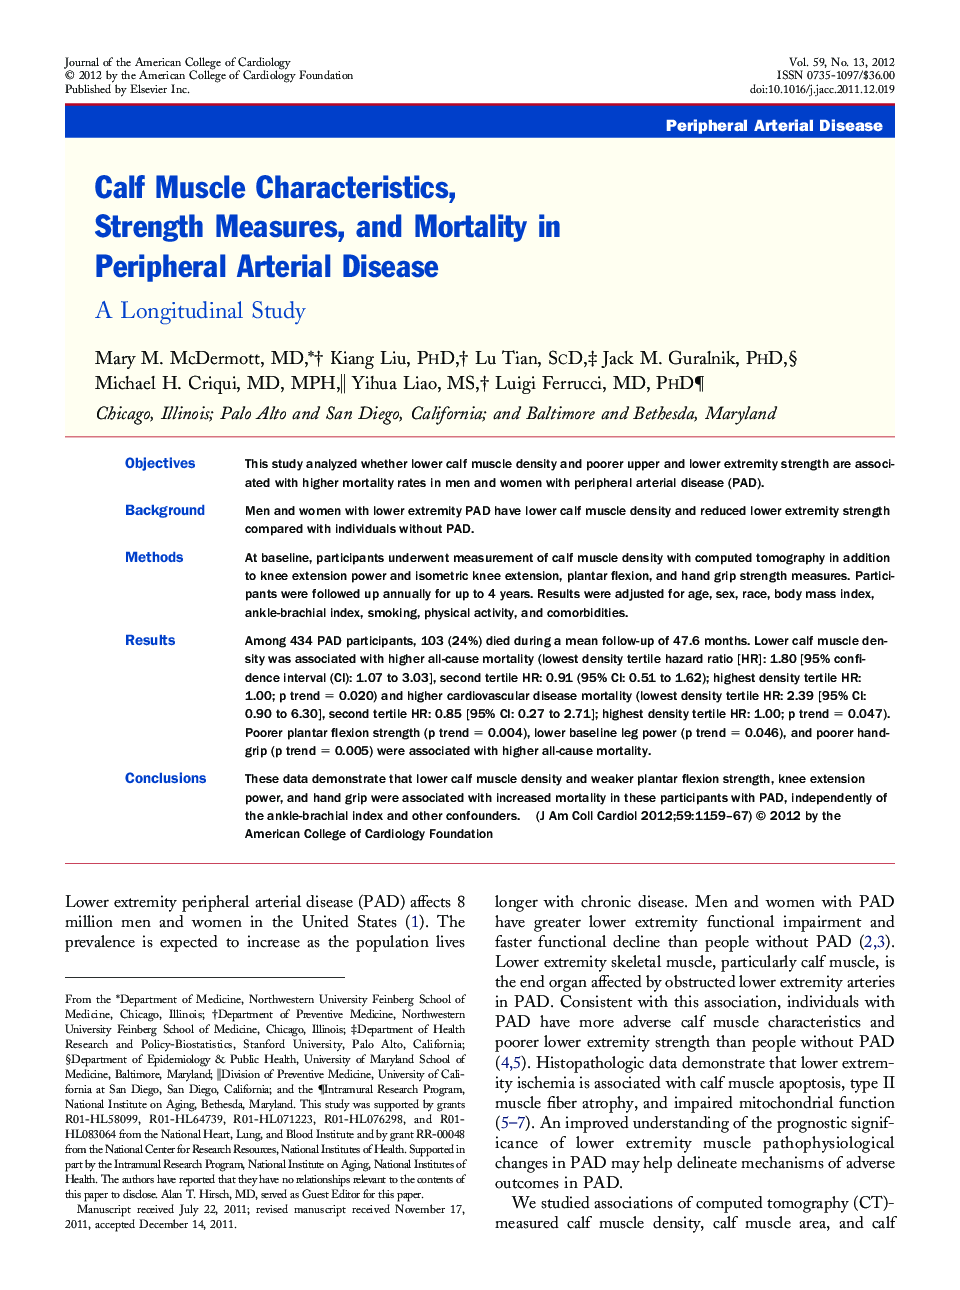 Calf Muscle Characteristics, Strength Measures, and Mortality in Peripheral Arterial Disease : A Longitudinal Study